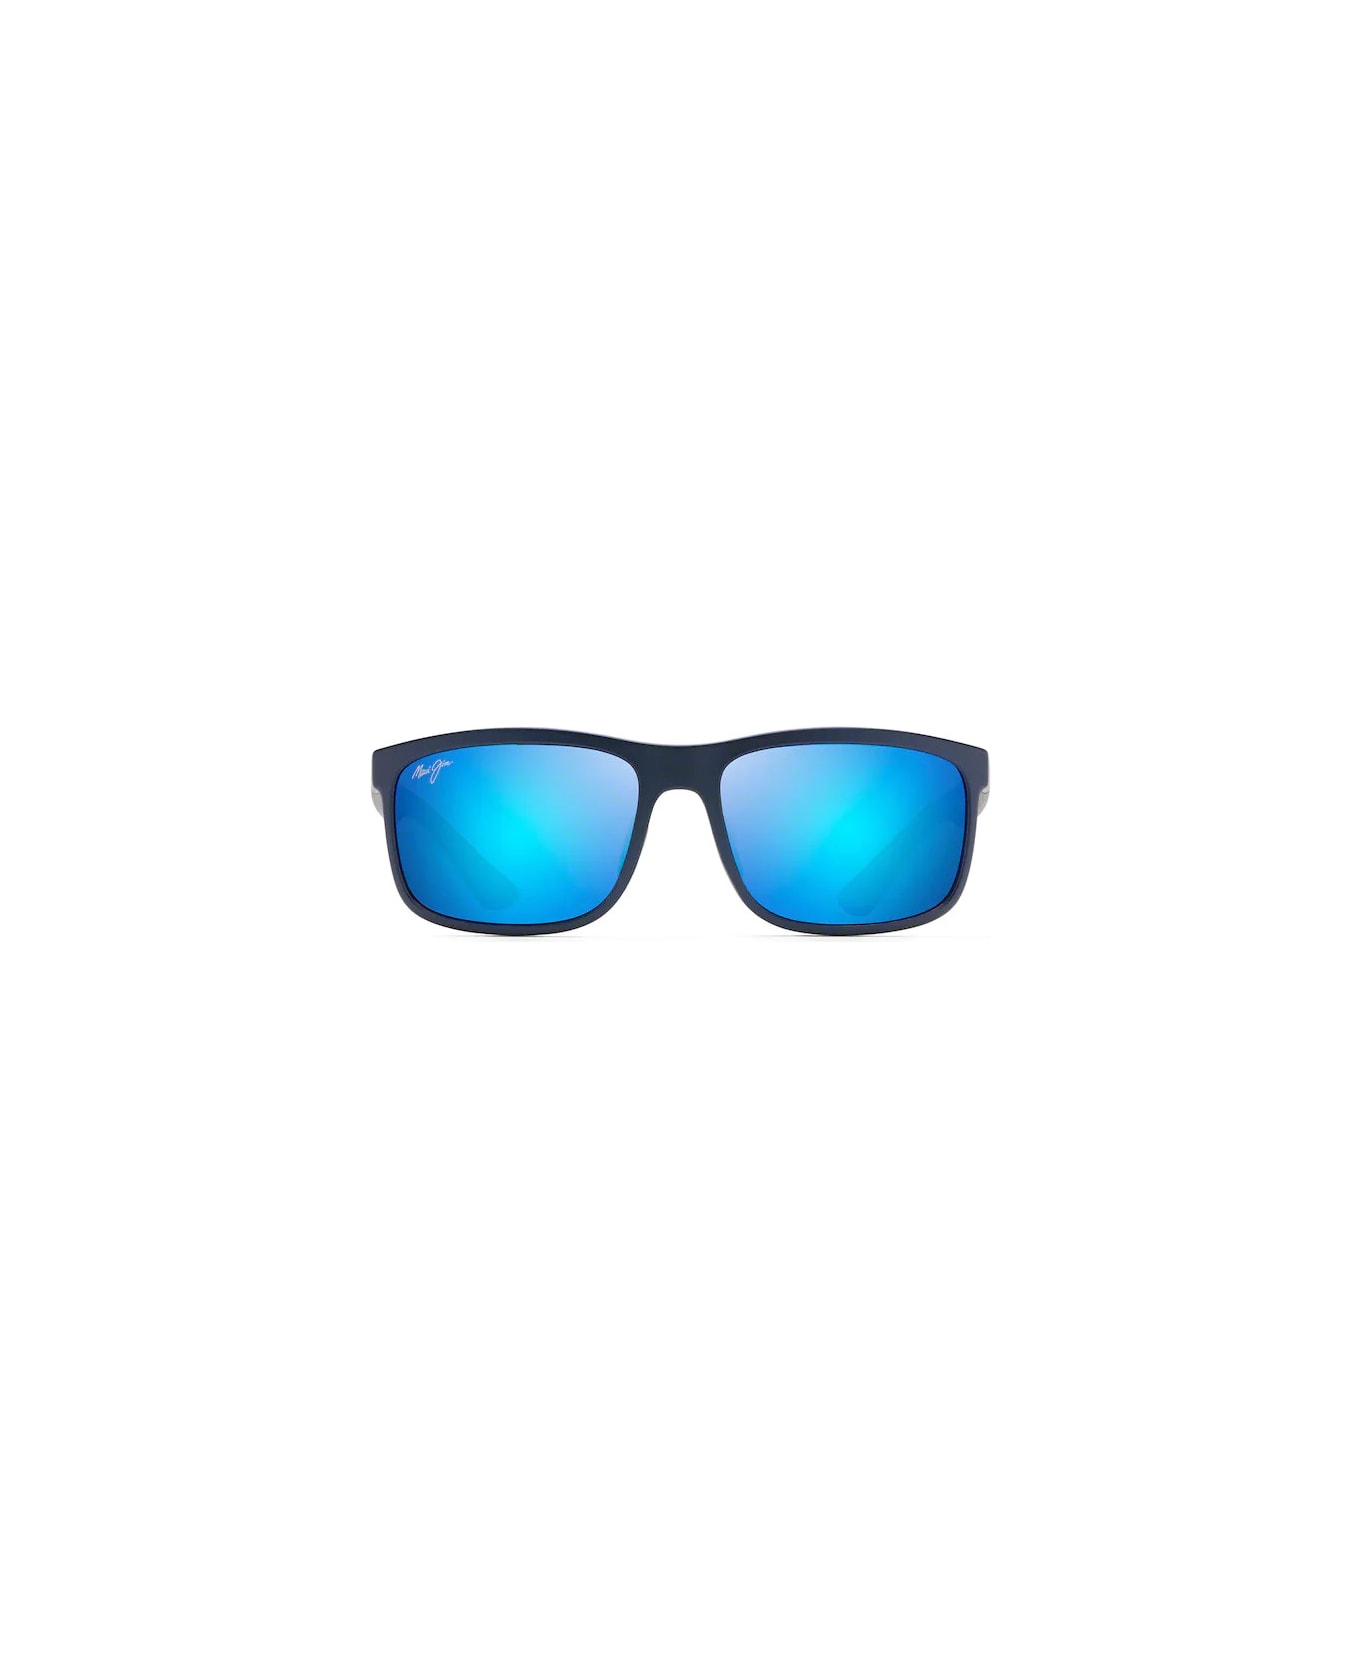 Maui Jim MJ449-03 Sunglasses - Blu サングラス